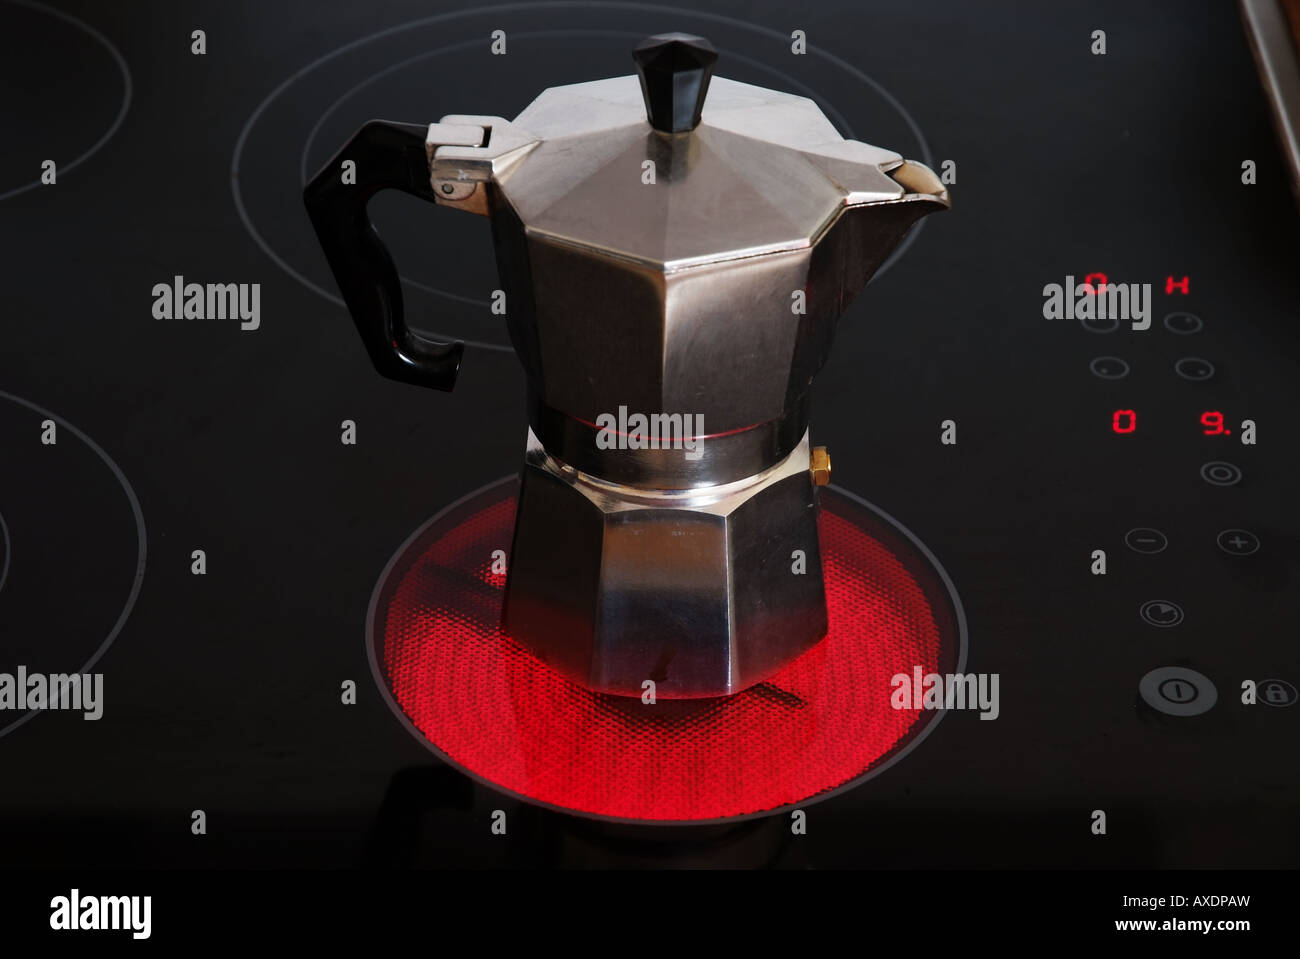 Cooking Coffee | Kaffee kochen Stock Photo